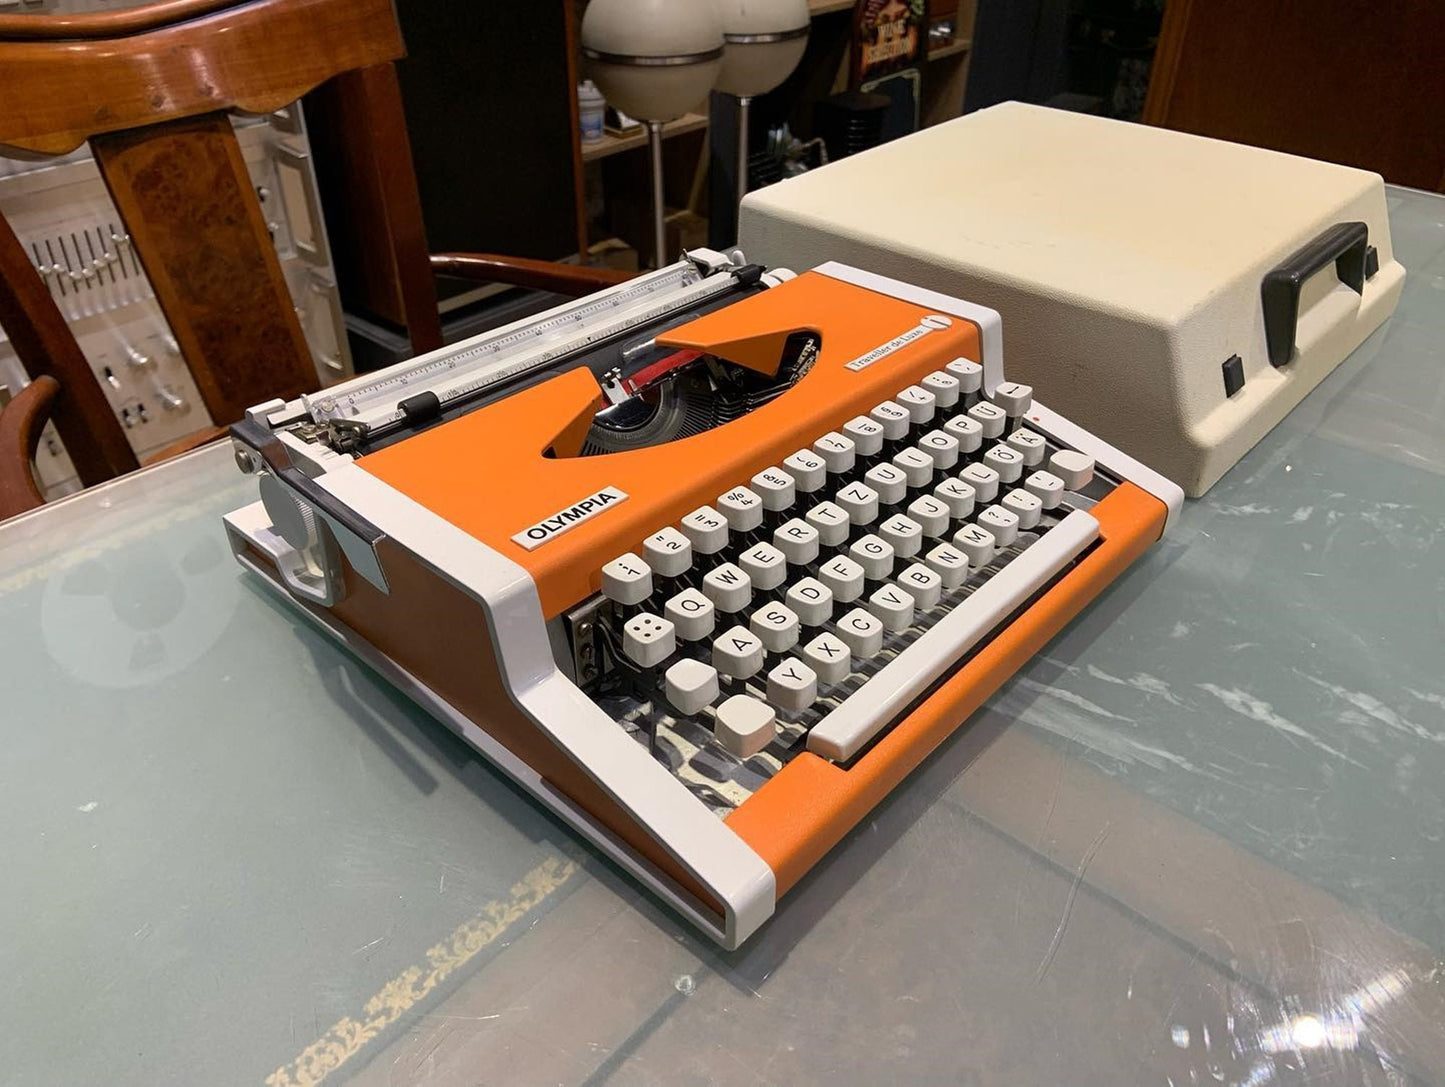 Orange Olympia Traveller Typewriter 1970s | Premium Gift | Orange Typewriter | Old Typewriter